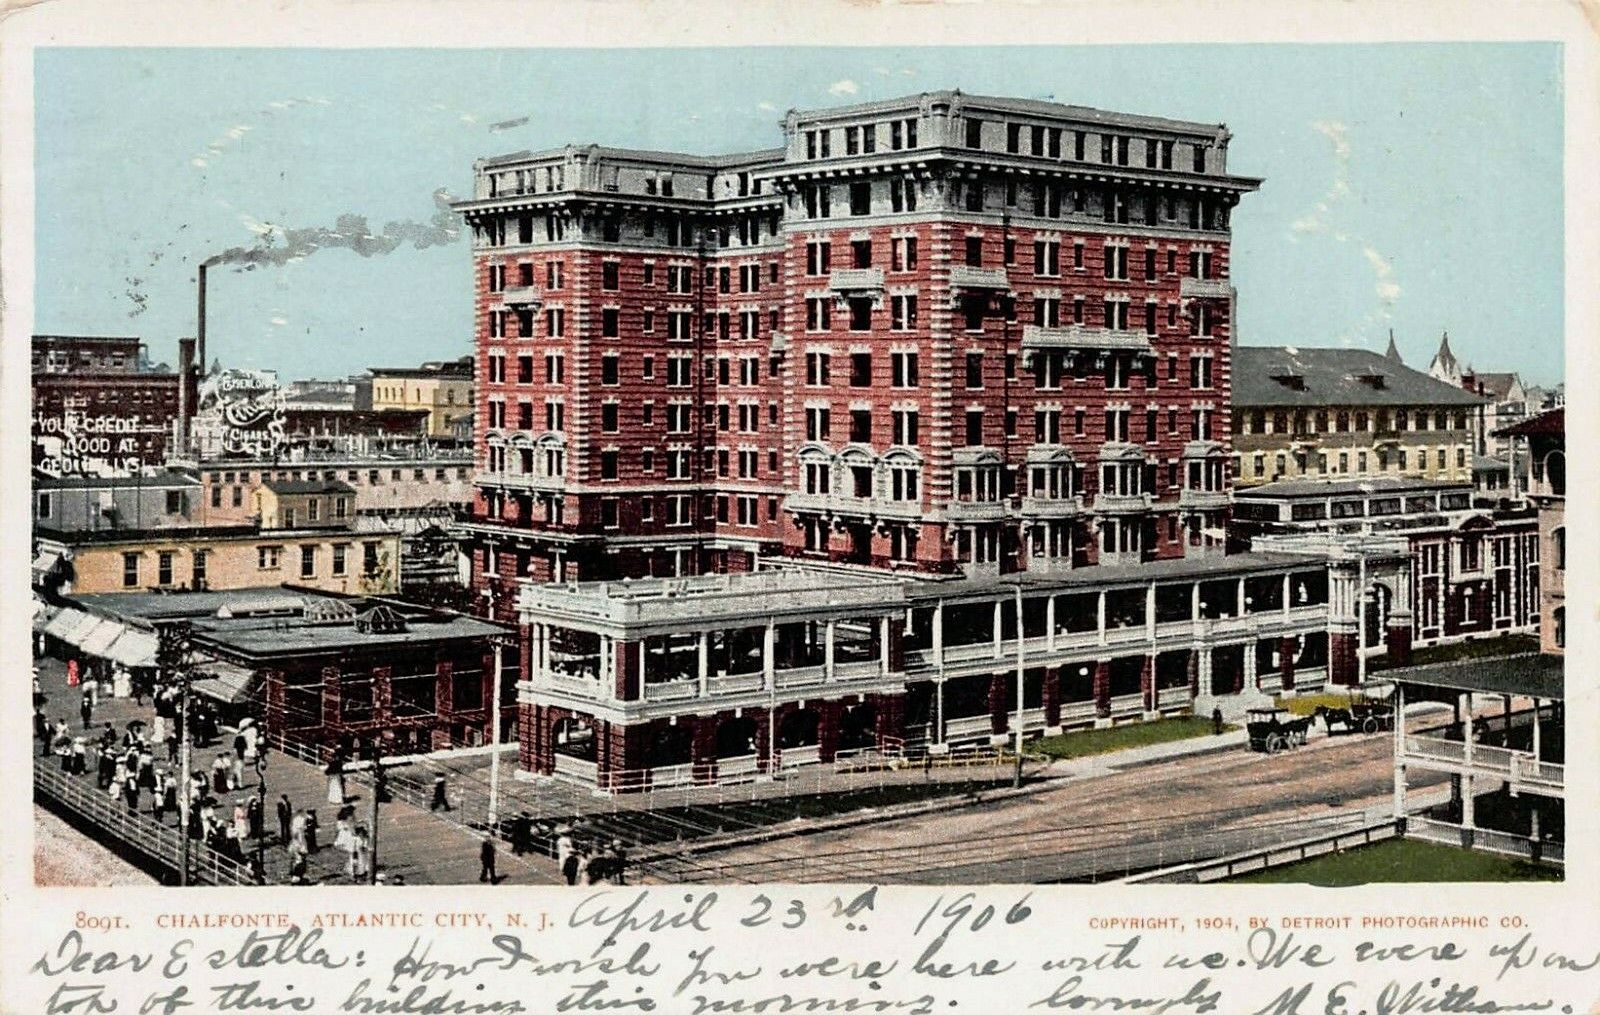 Chalfonte Hotel, Atlantic City, N.J., 1904 Postcard, Detroit Photographic Co.